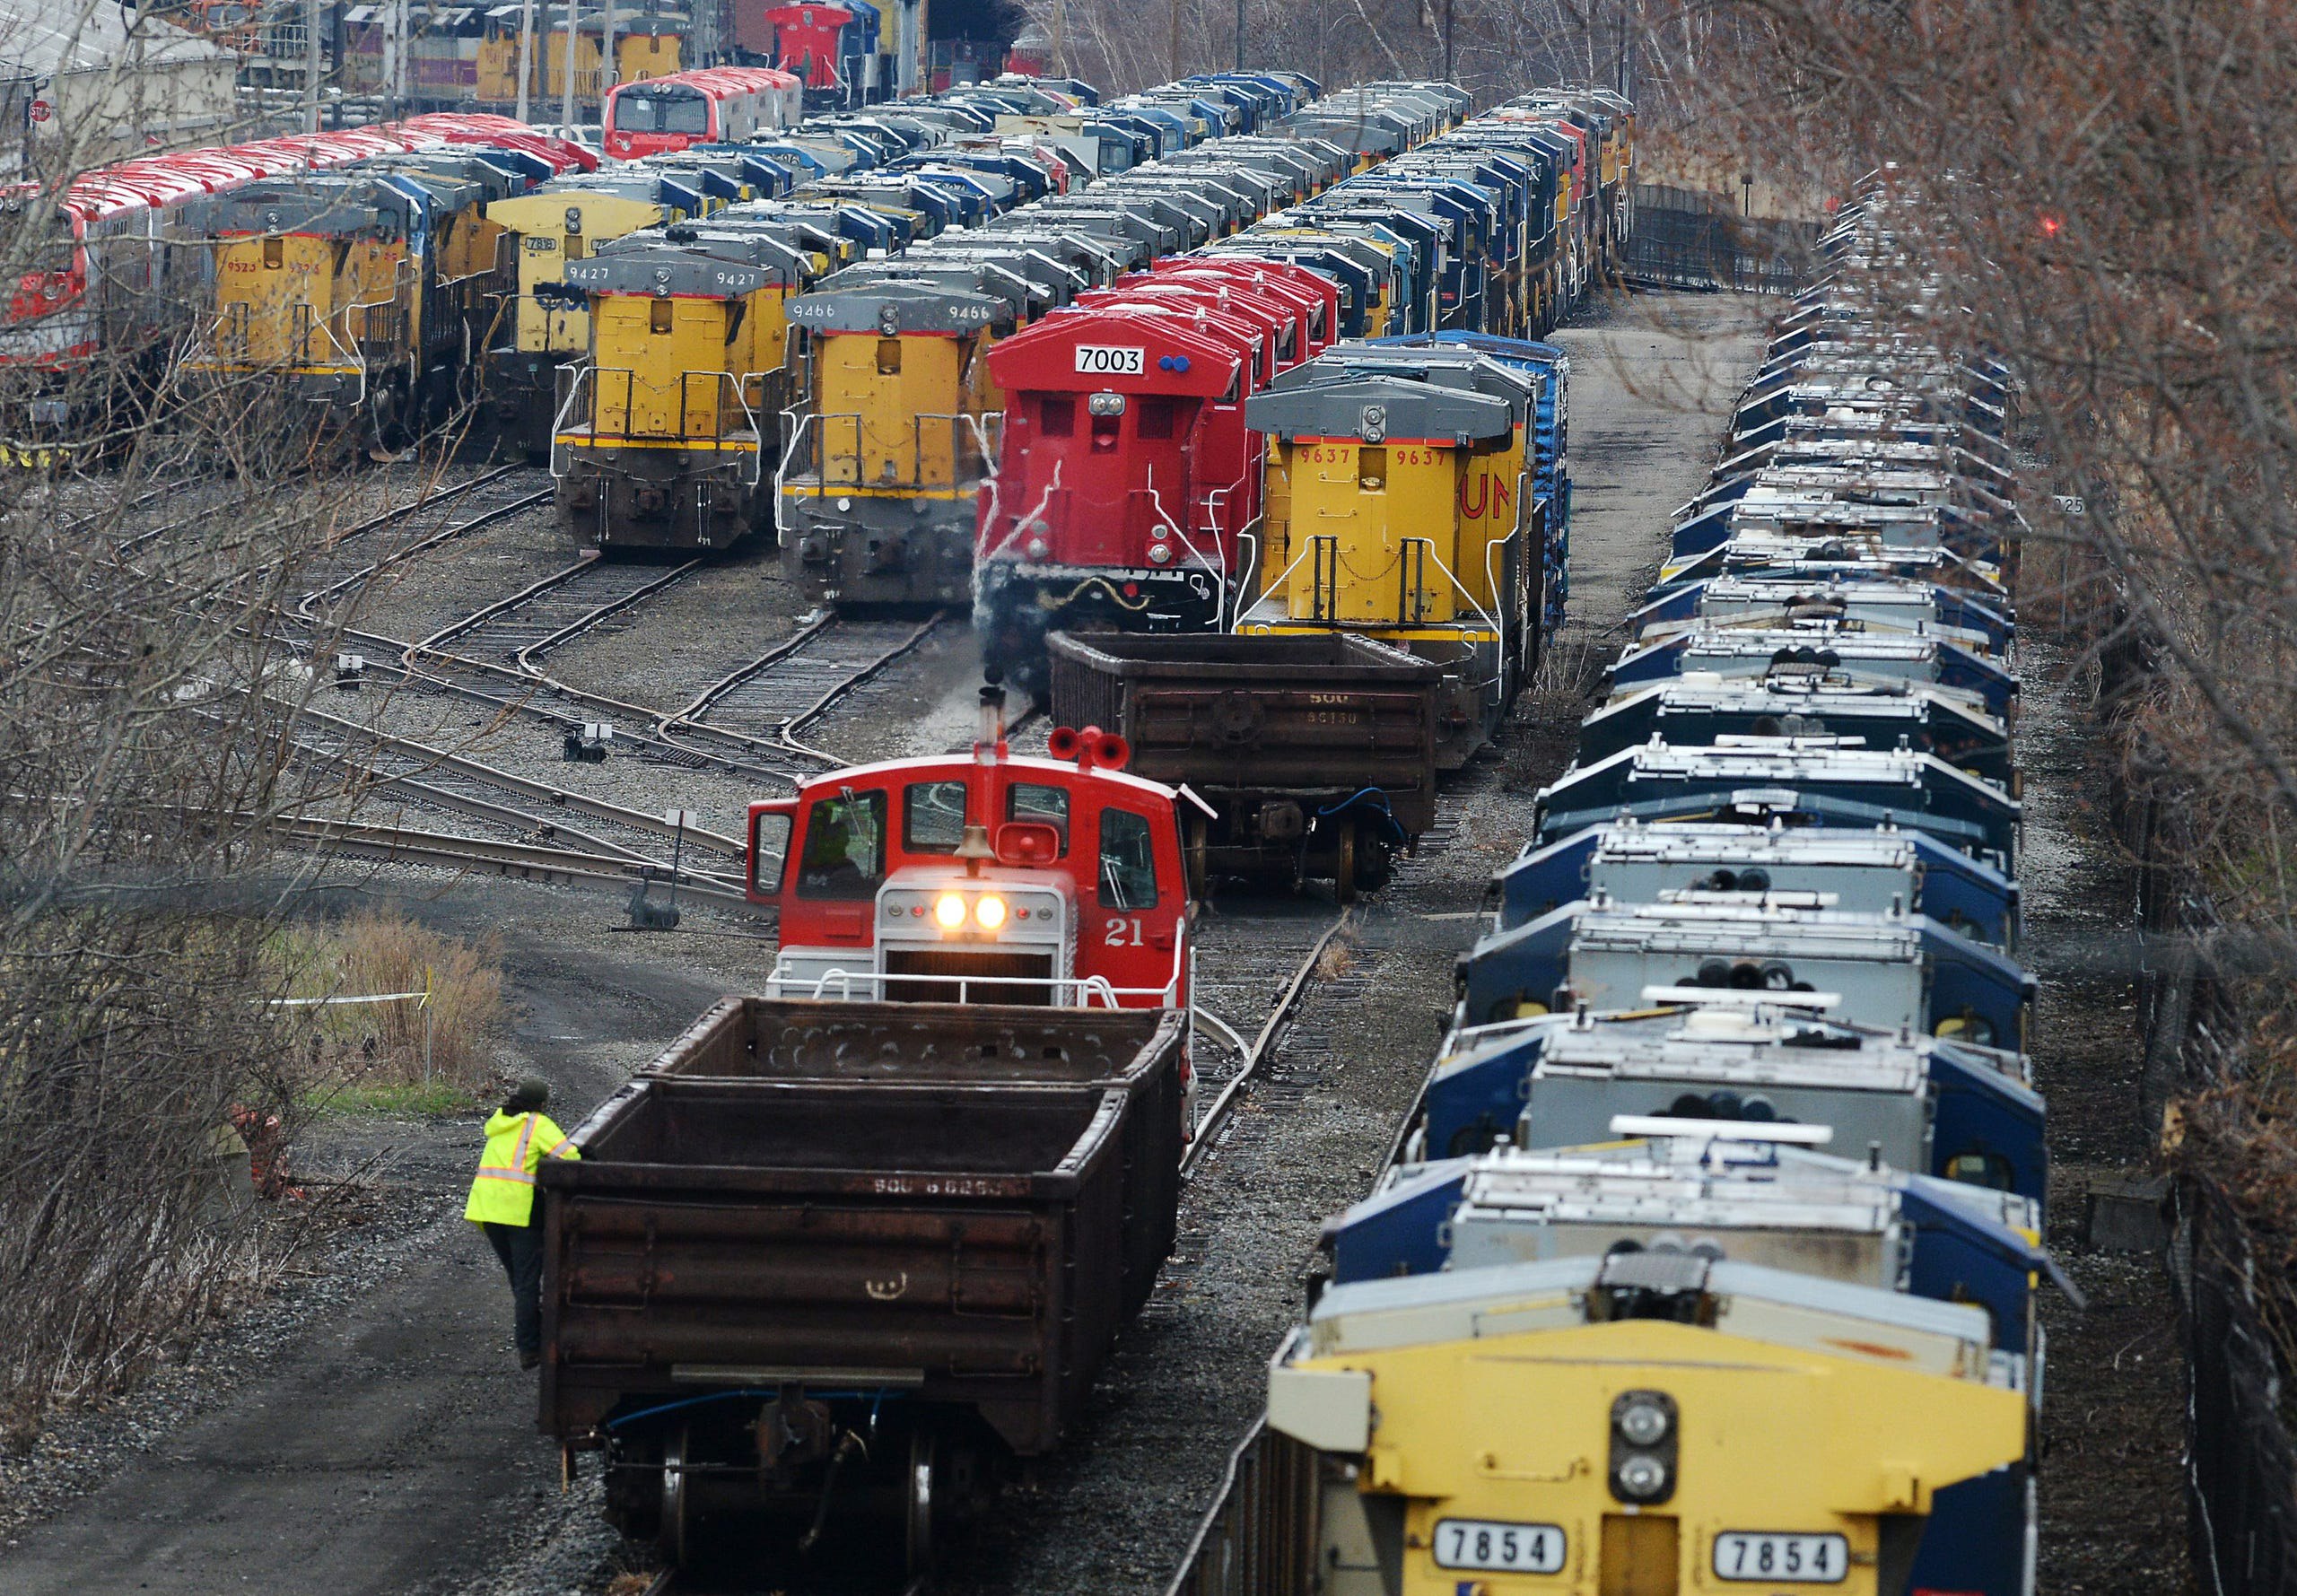 Diesel locomotives at Wabtec’s plant in Erie, USA